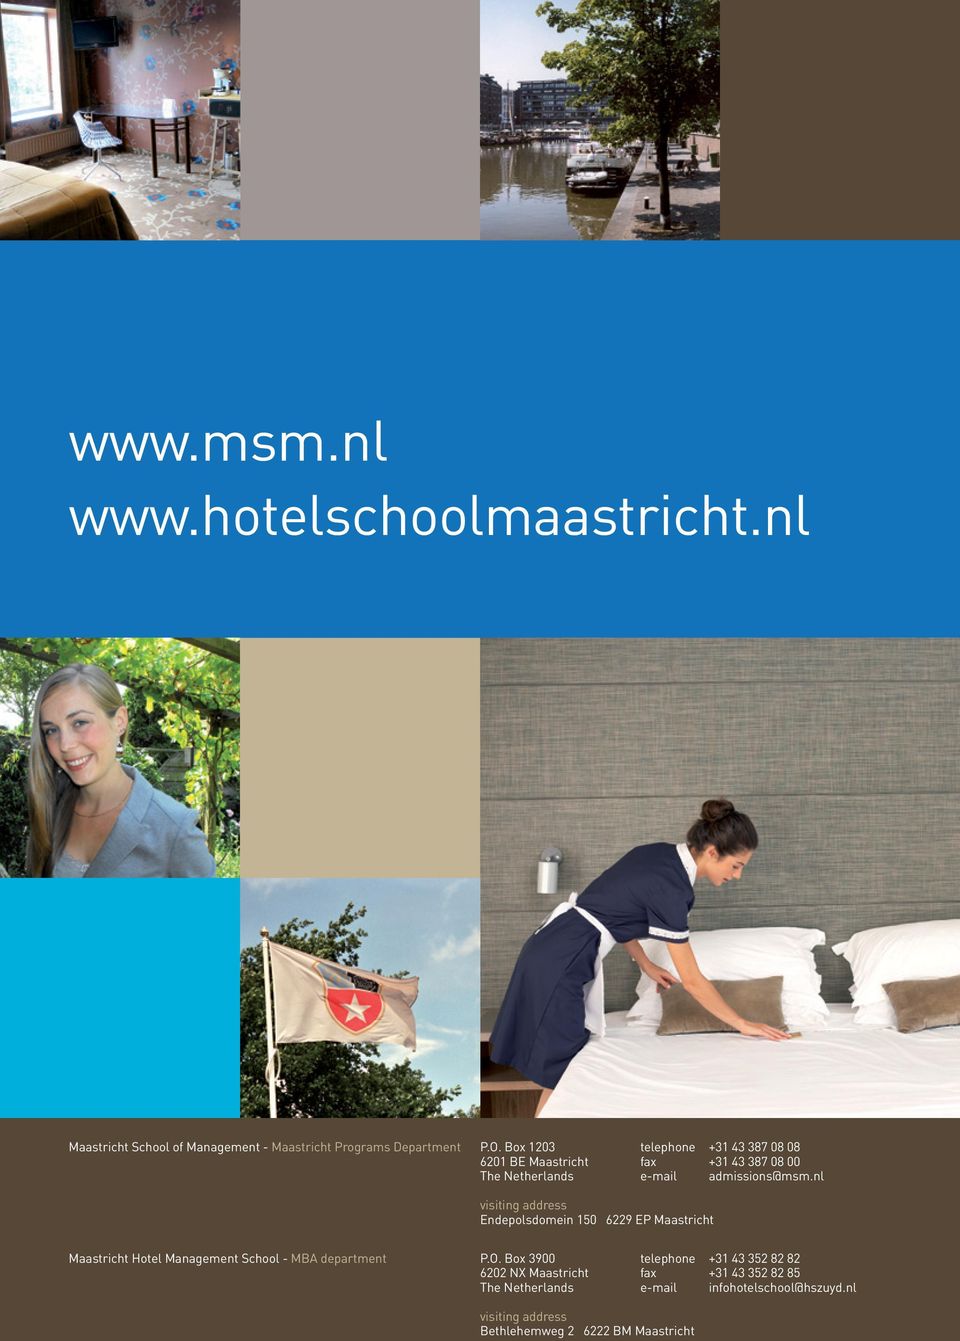 nl visiting address Endepolsdomein 150 6229 EP Maastricht Maastricht Hotel Management School - MBA department P.O.